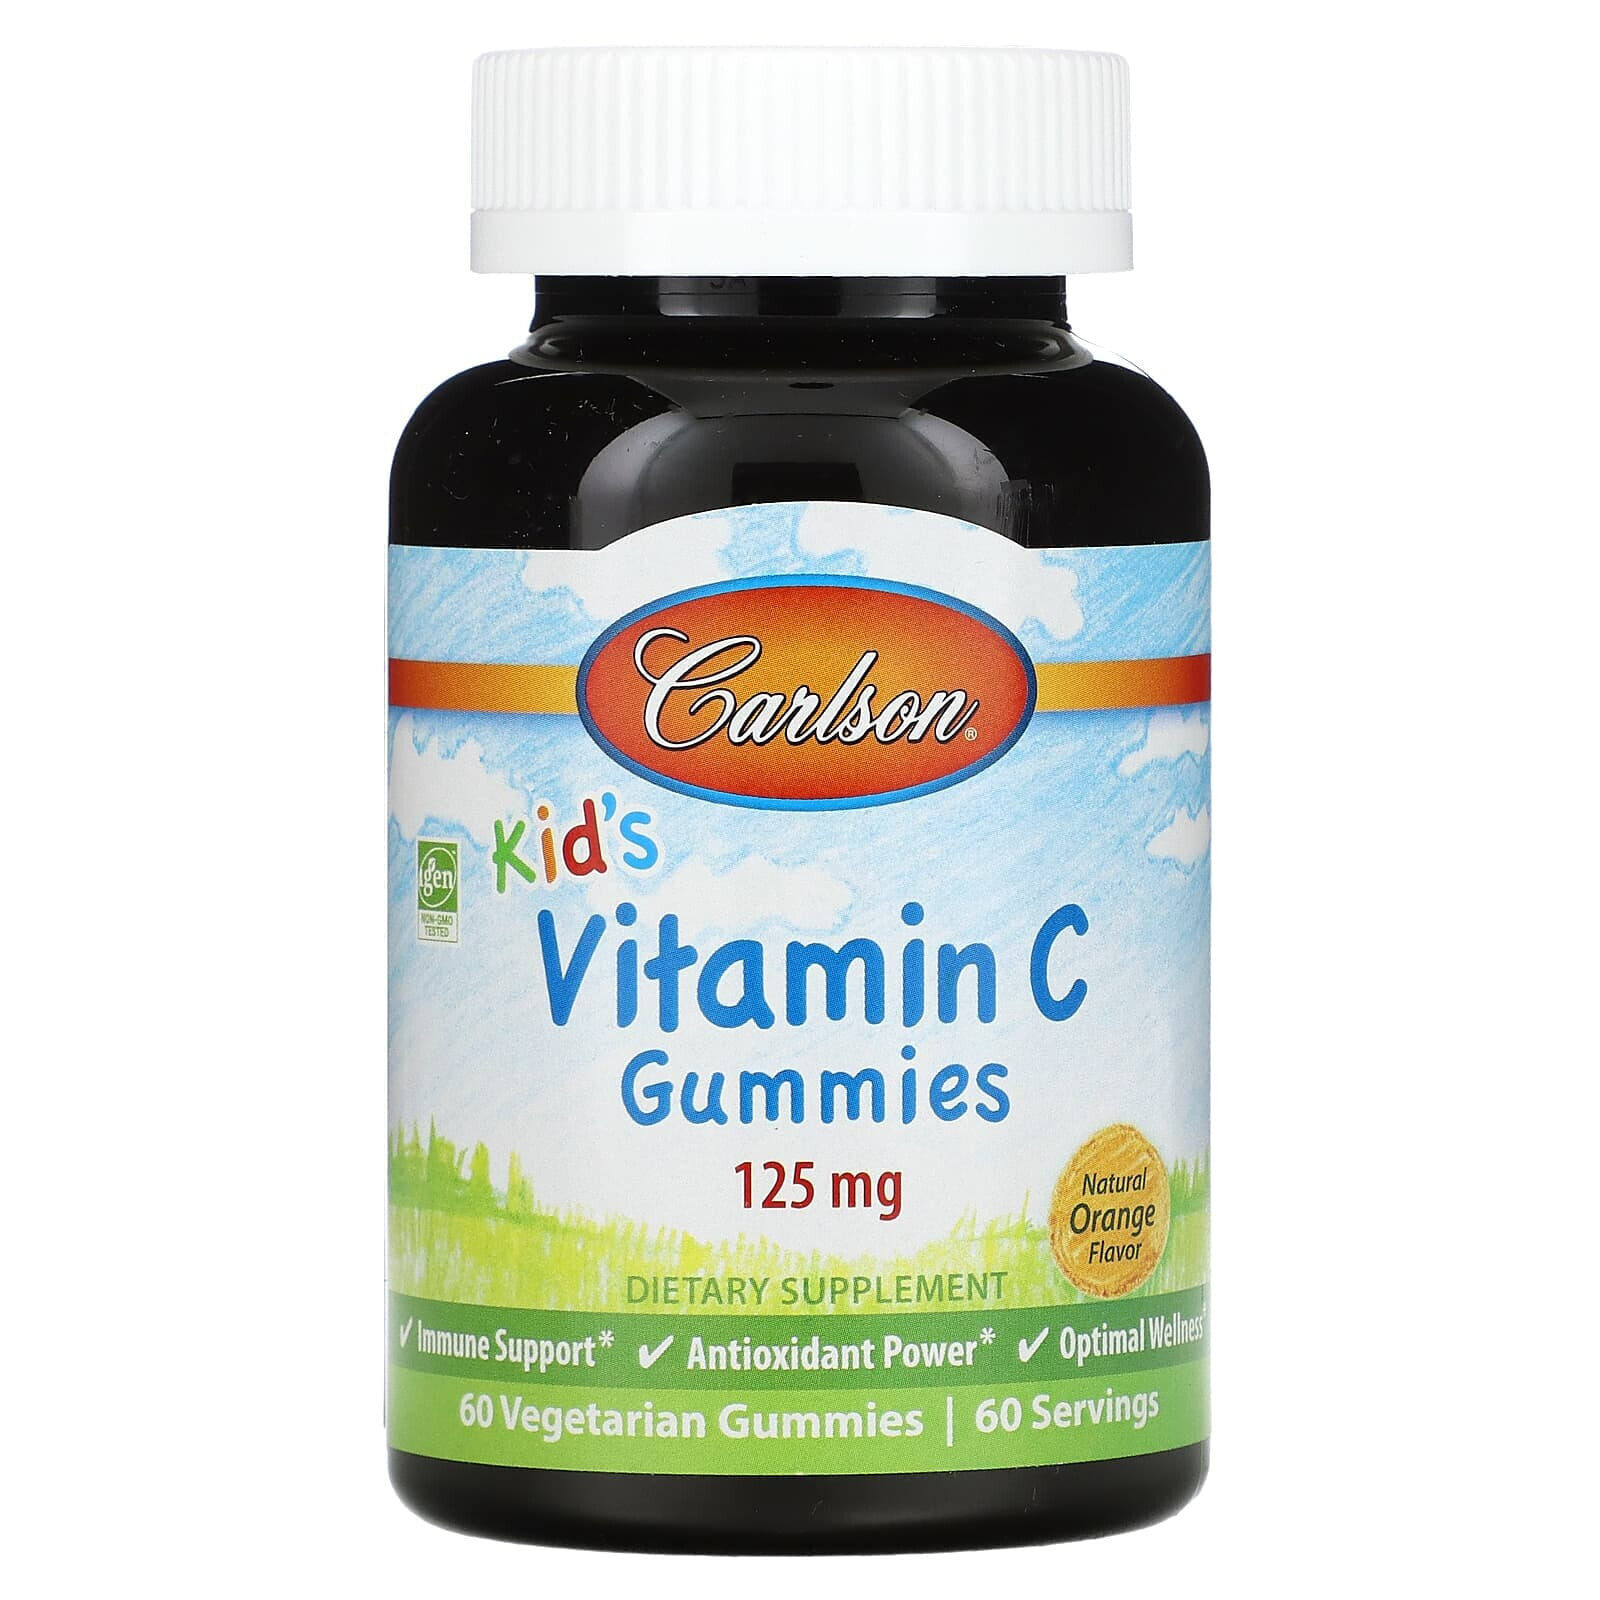 Kid's Vitamin C Gummies, Natural Orange, 125 mg, 60 Vegetarian Gummies